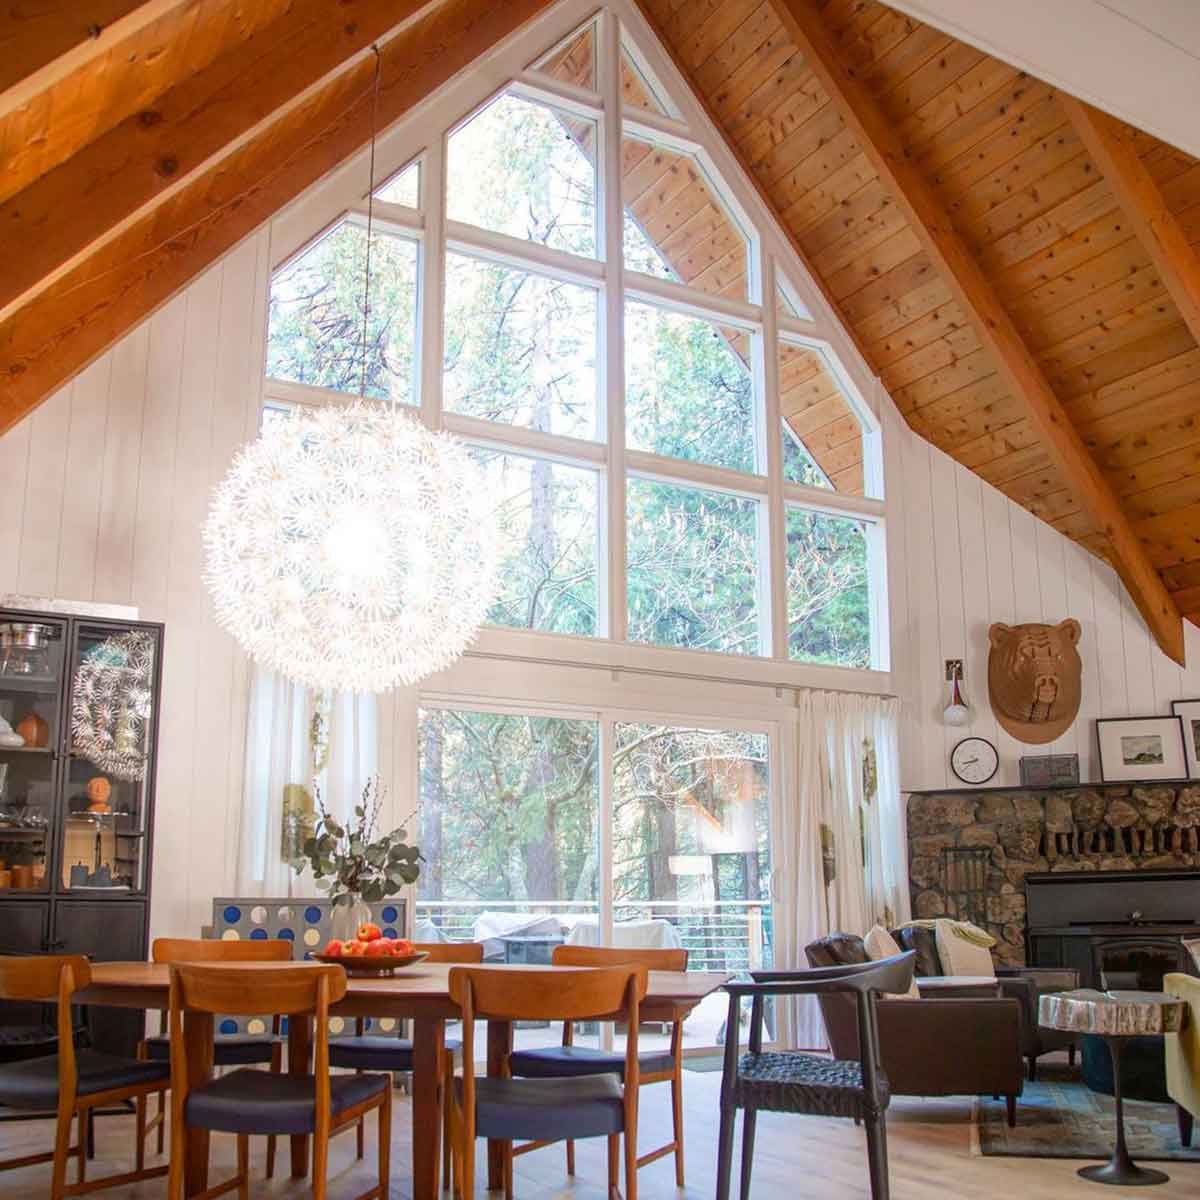 10 Best Cabin Interior Design and Decorating Ideas